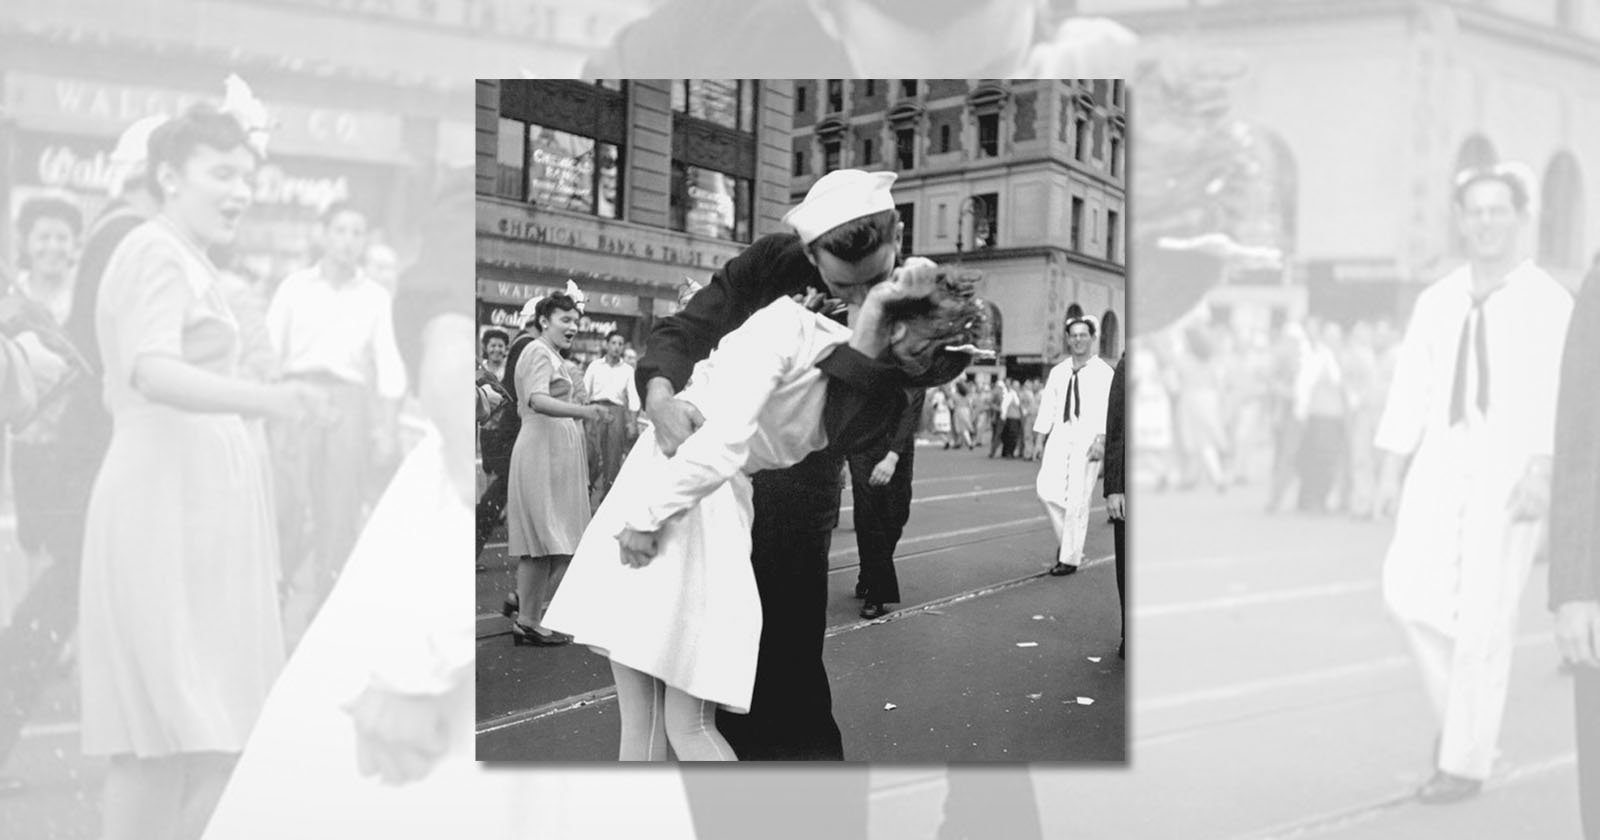 VA Backtracks on Plan to Ban Iconic V-Day Kiss Photo From Facilities